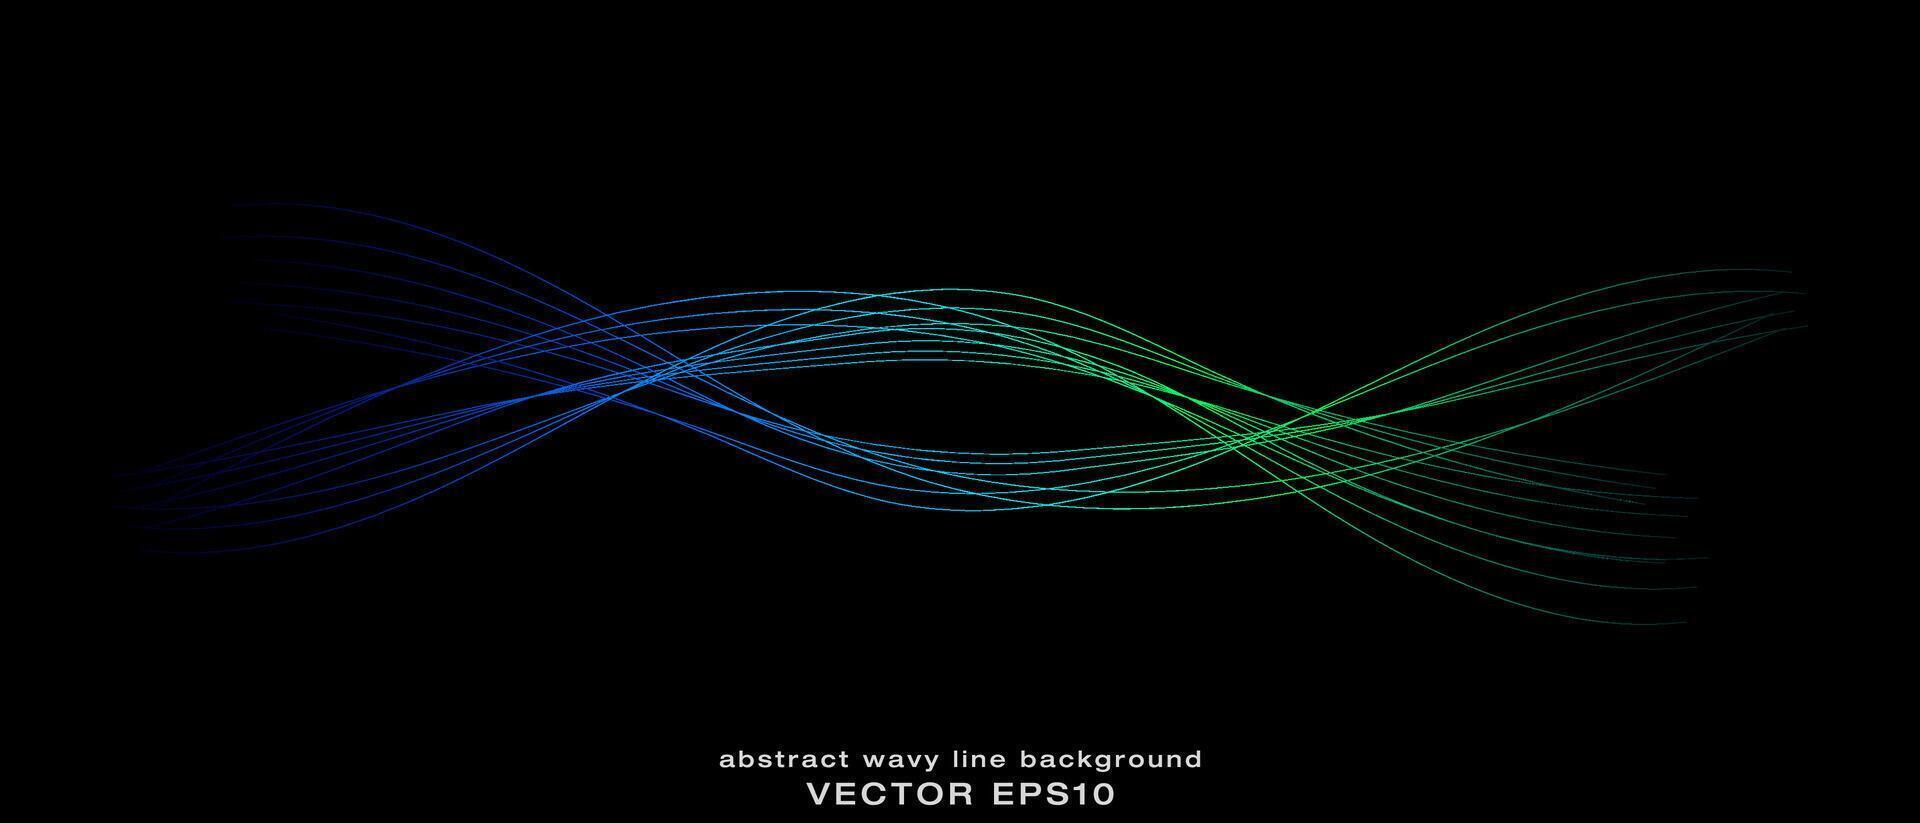 abstract golvend dynamisch blauw groen paars licht lijnen kromme banier Aan zwart achtergrond in concept technologie, neurale netwerk, neurologie, wetenschap, muziek, neon licht. vector